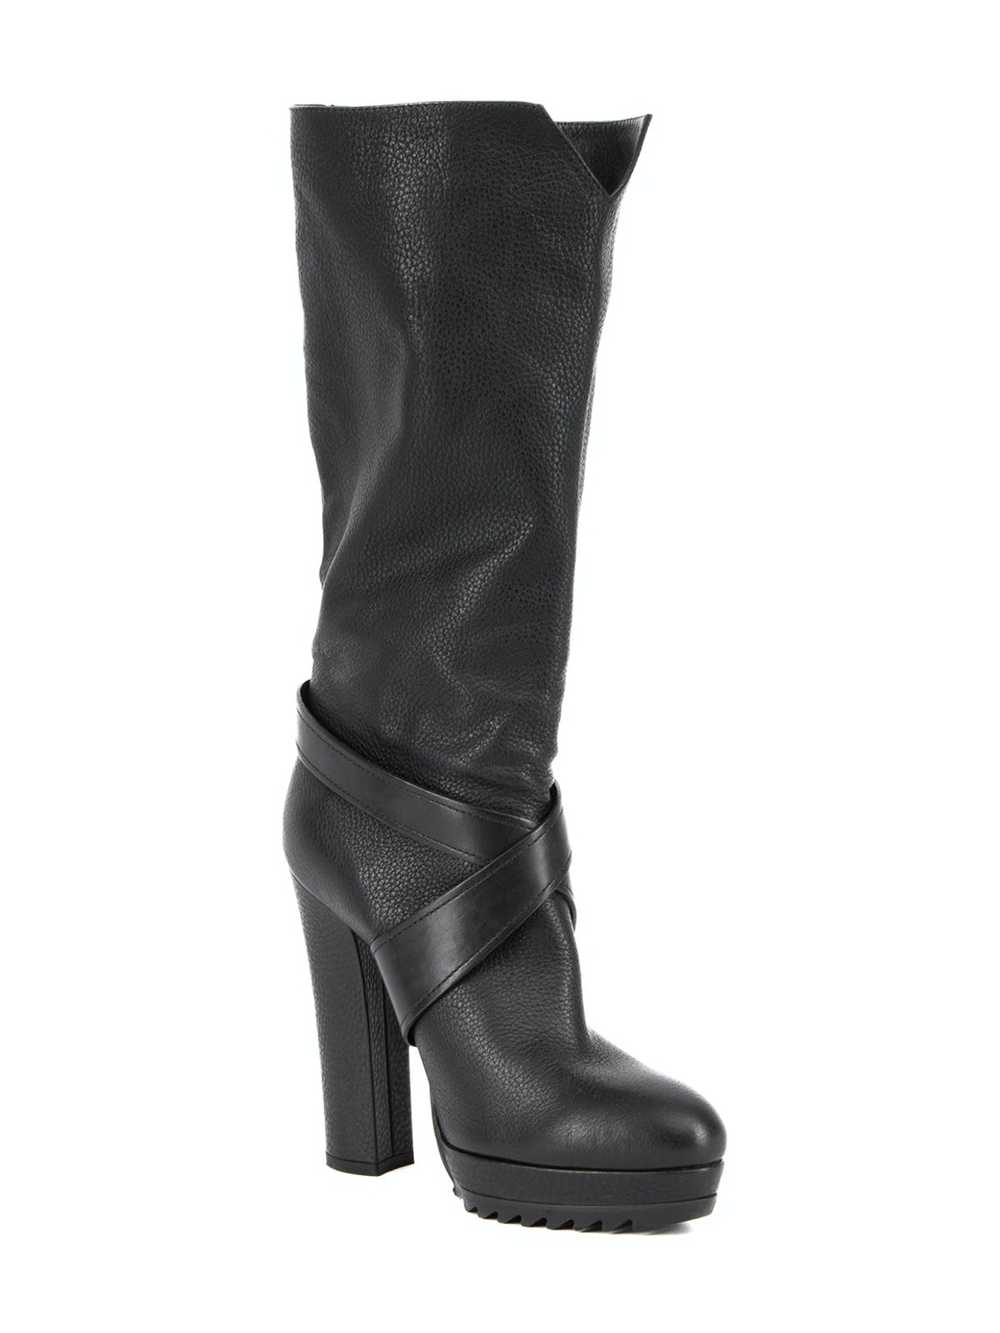 Bottega Veneta Knee High Boots with Buckle Detail - image 2